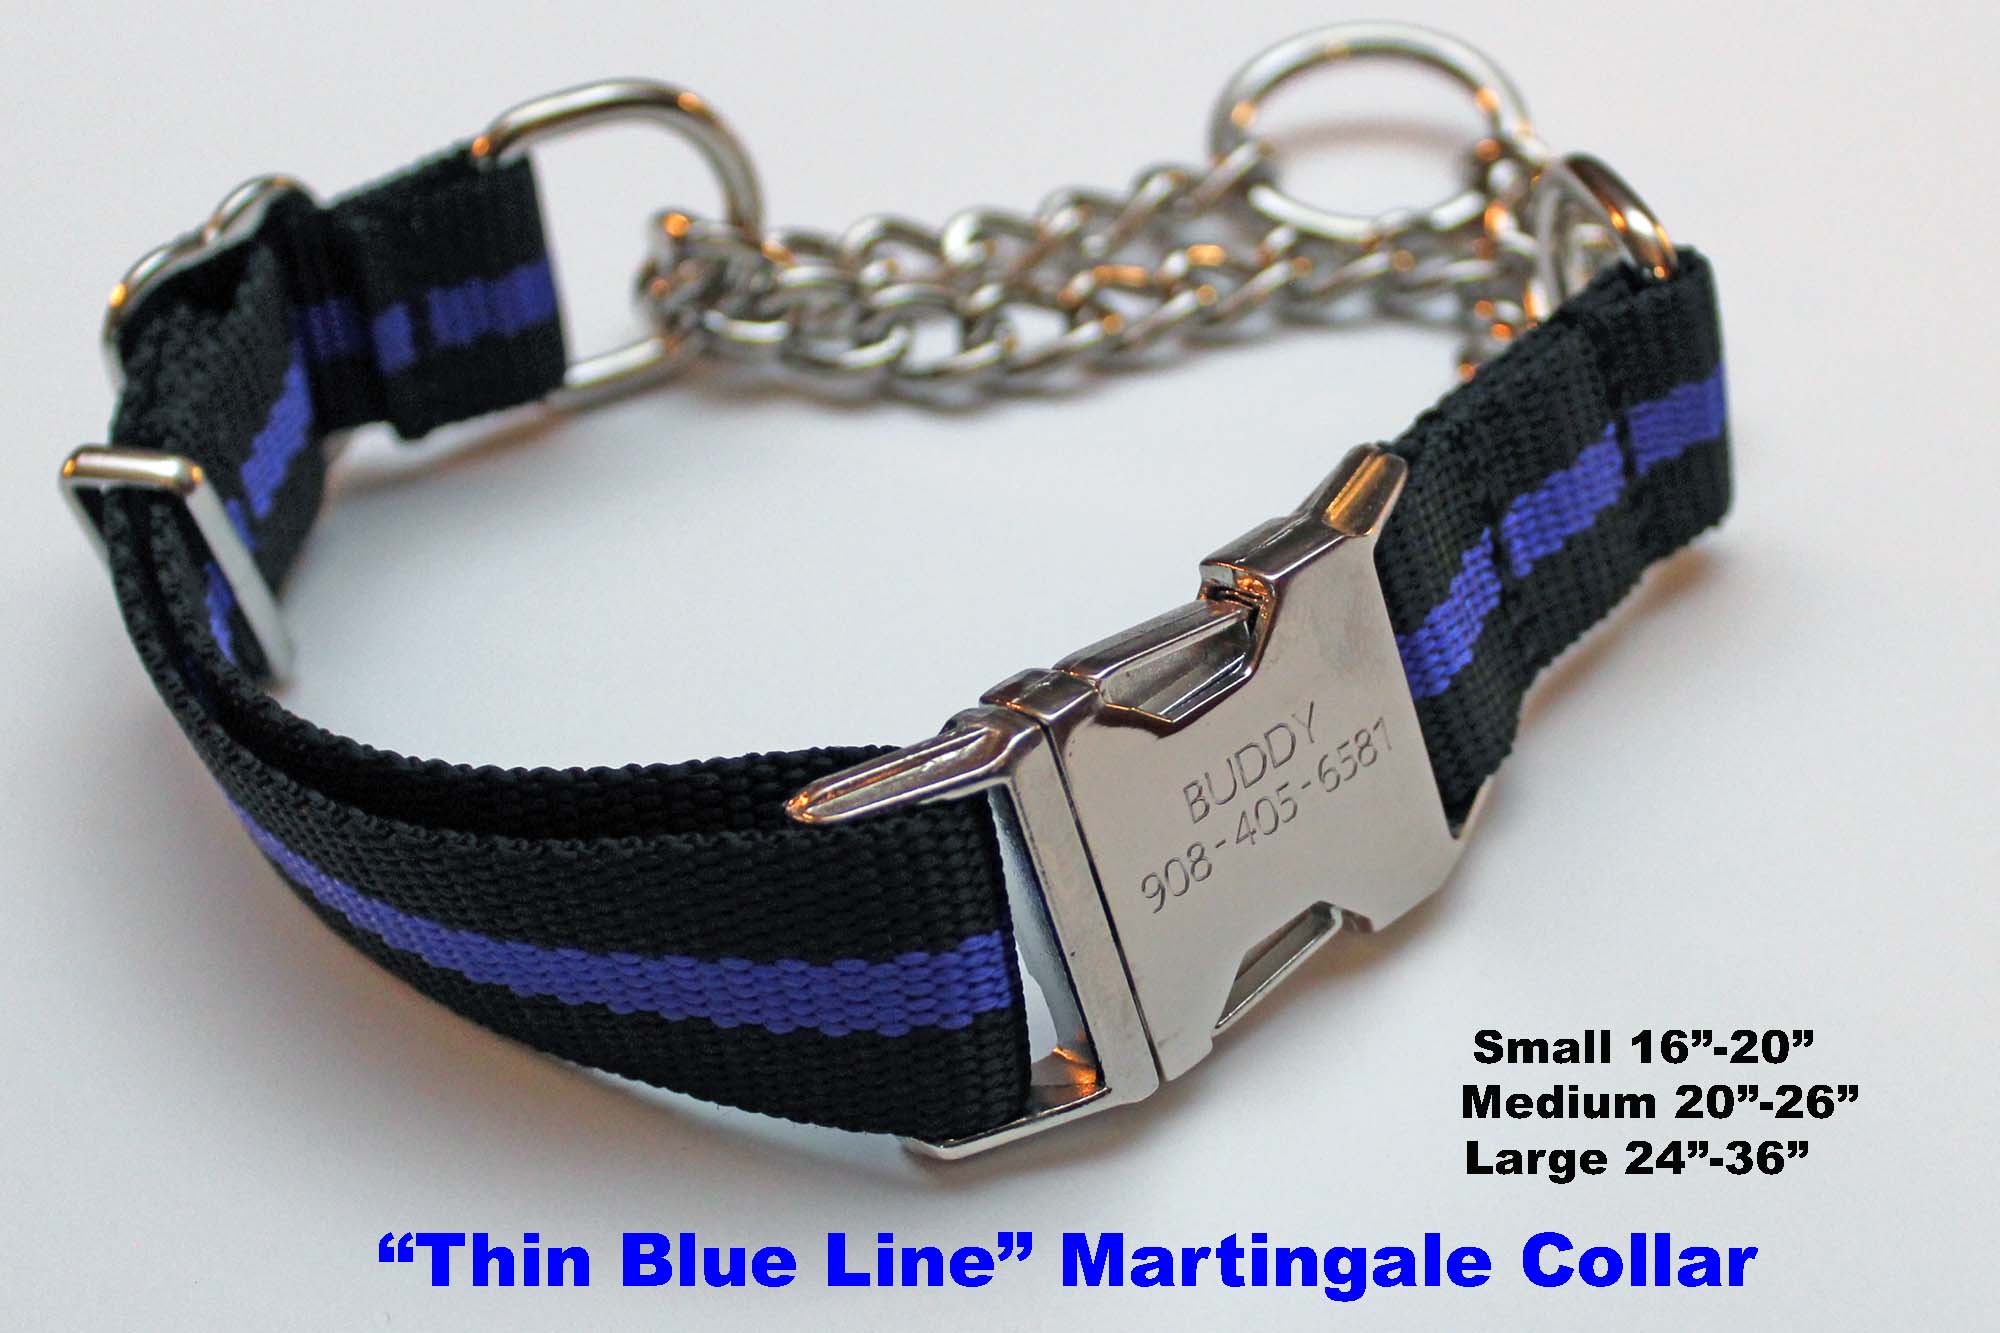 Dog Collar 1 inch wide nylon adjustable hybrid metal buckle Quatrefoil quick release chain martingale